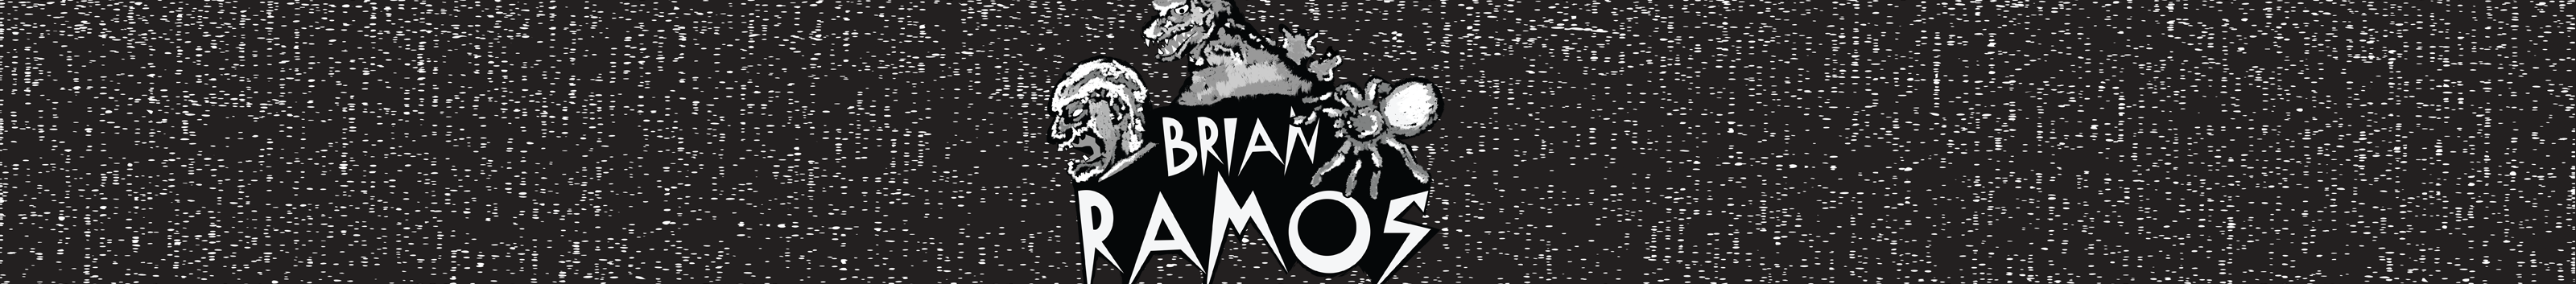 Brian Ramos's profile banner